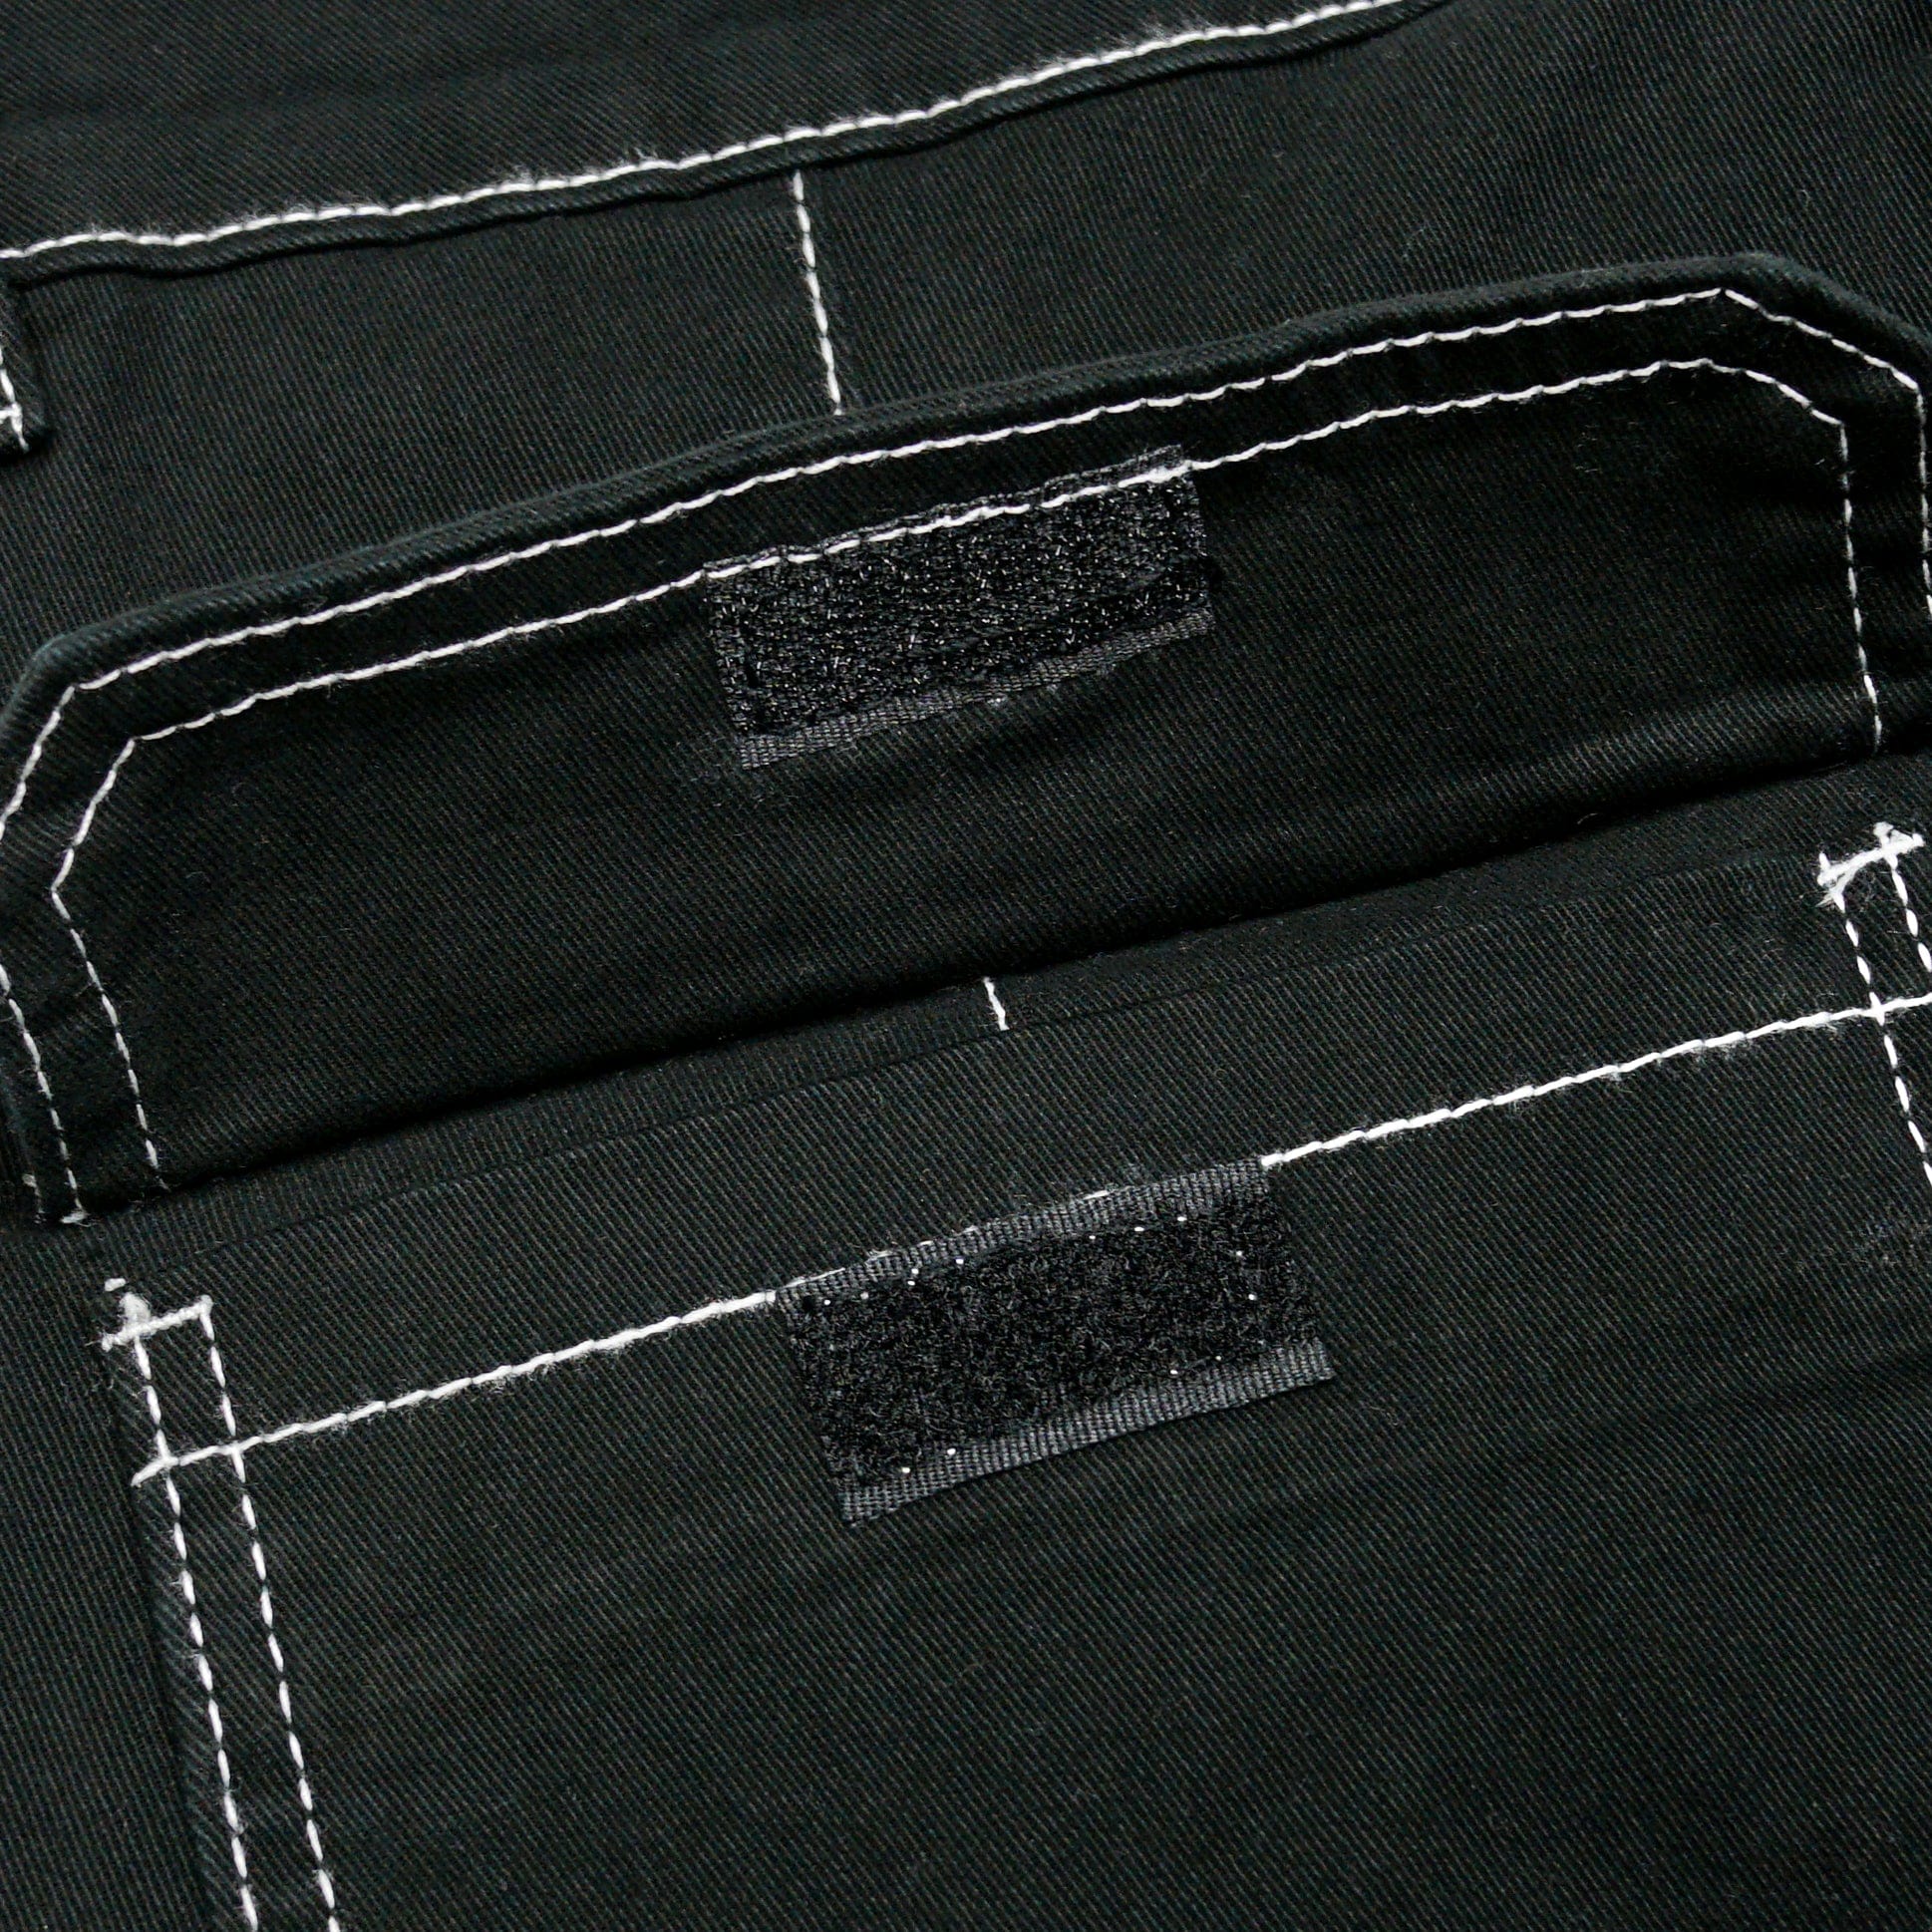 Carpenter Trouser in contrast black